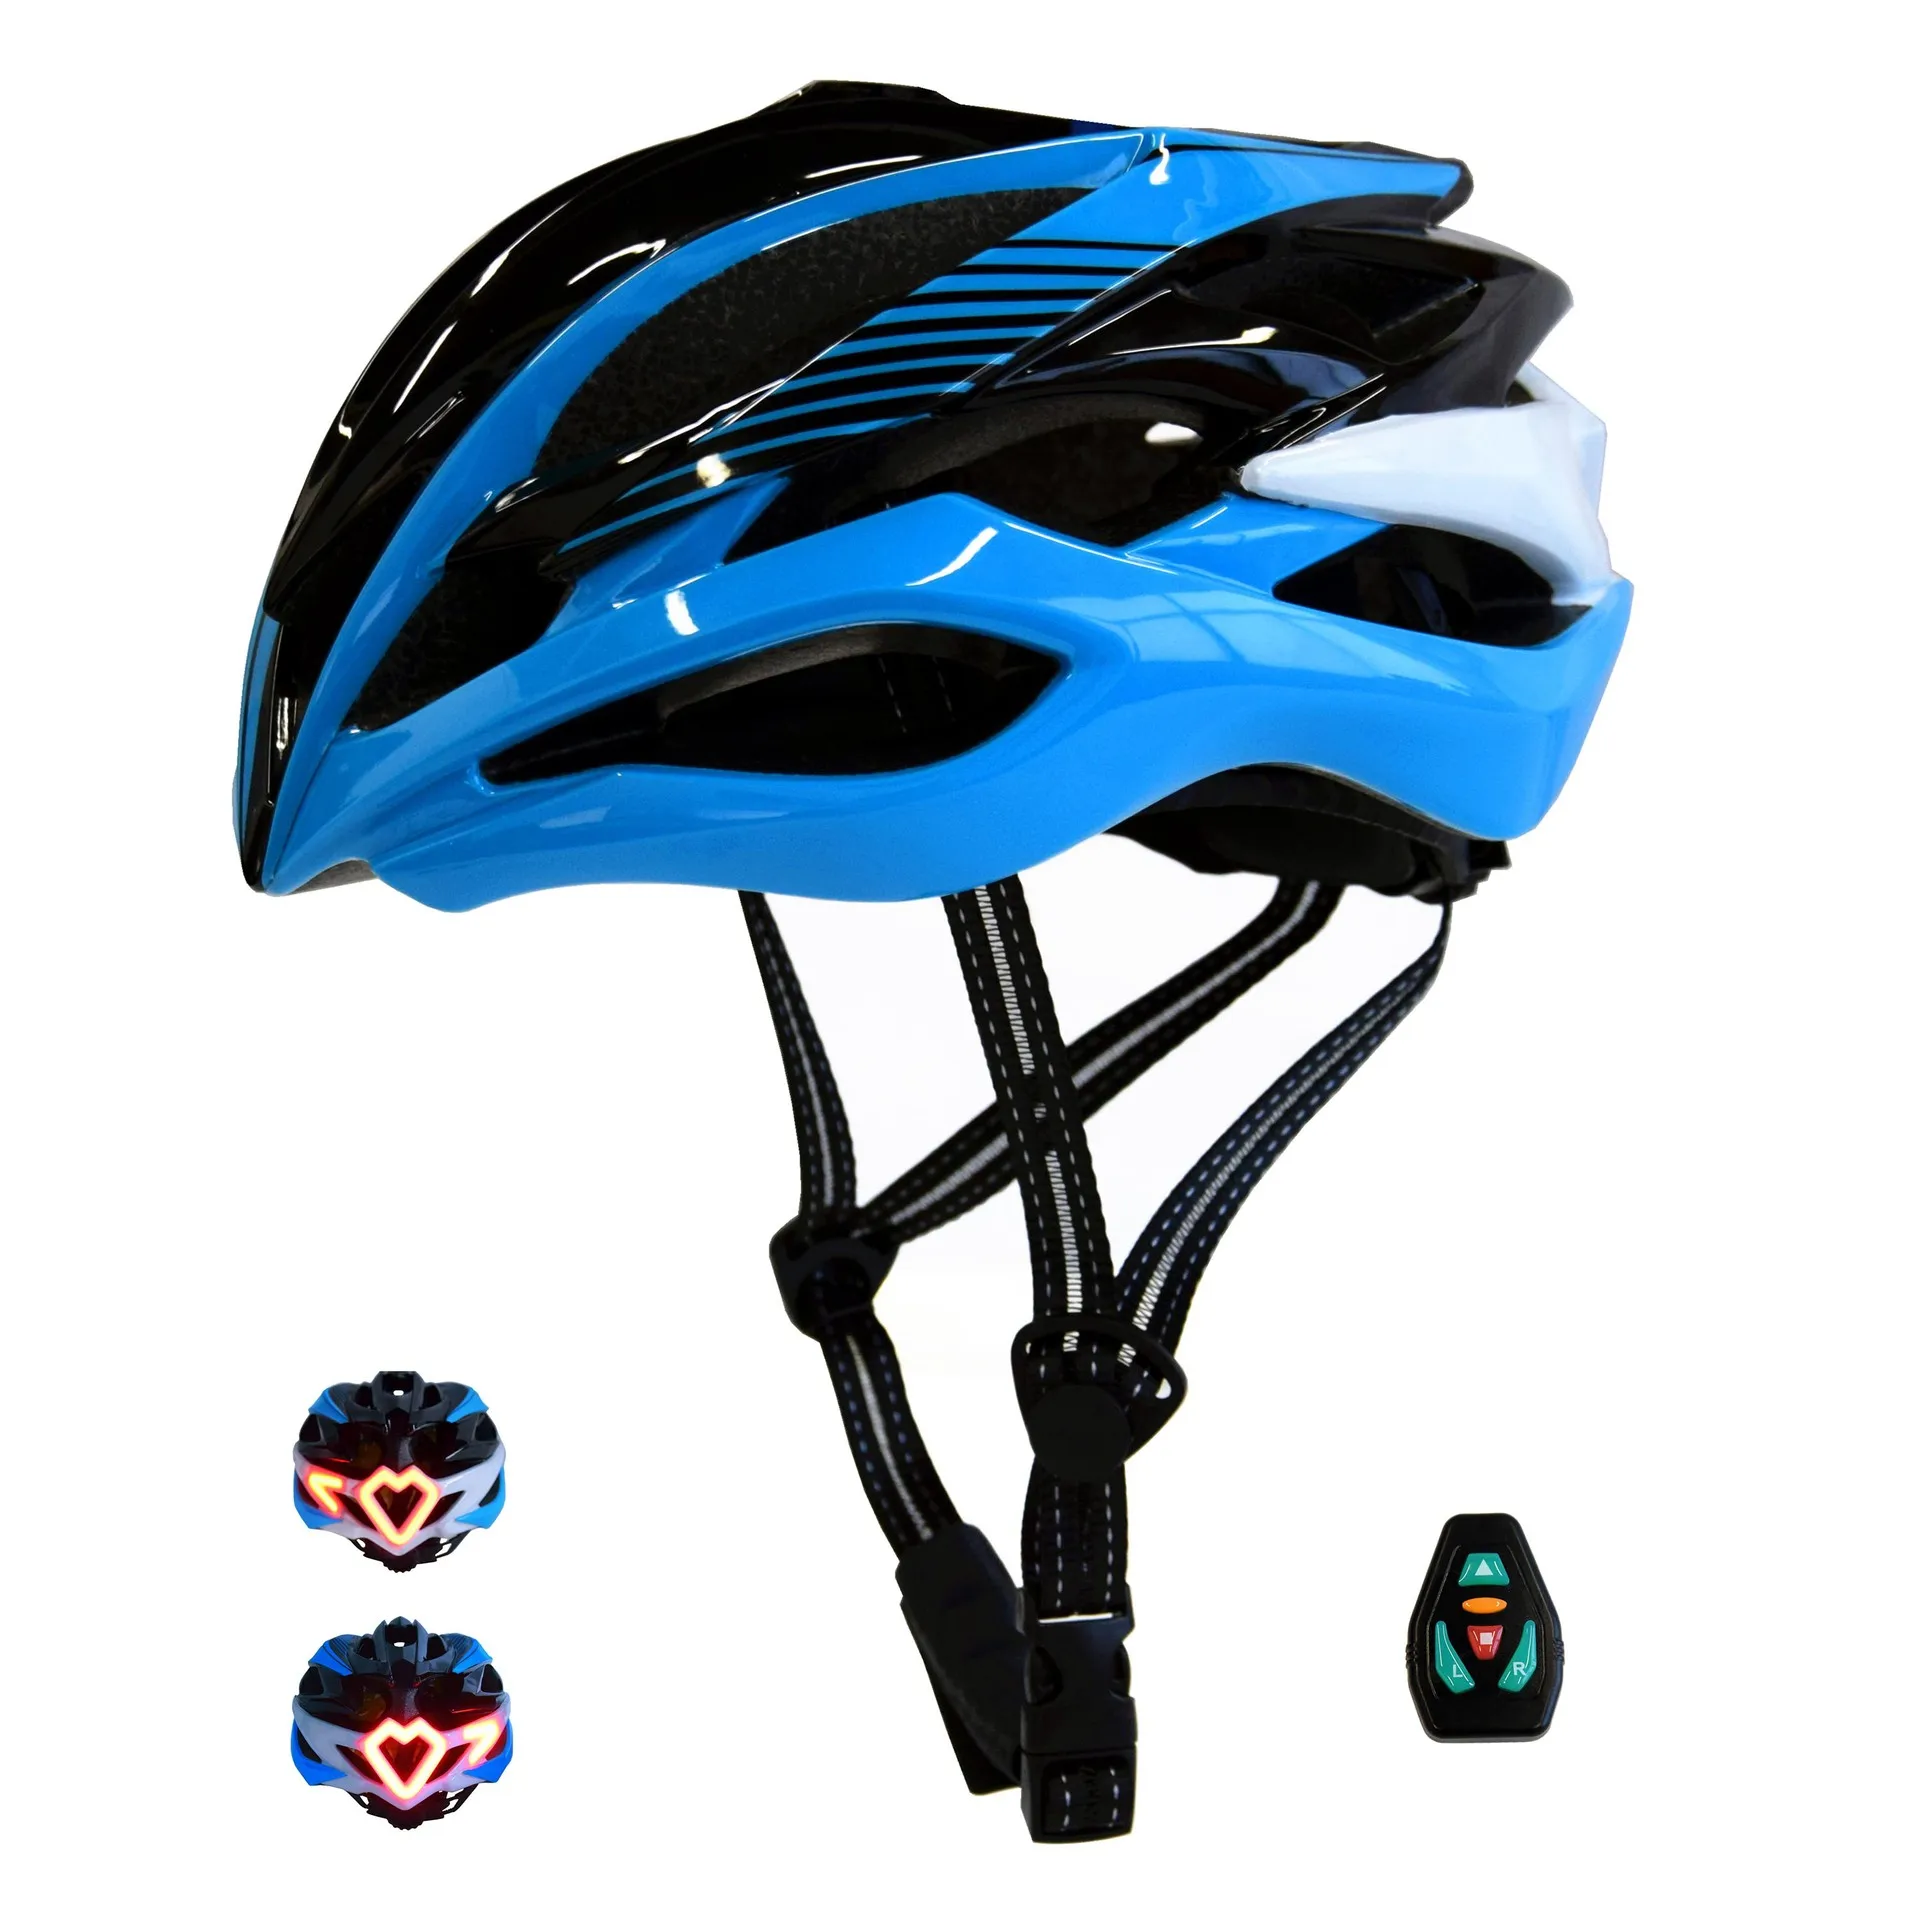 Smart Remote control riding steering helmet LED light-emitting bike cycling helmet